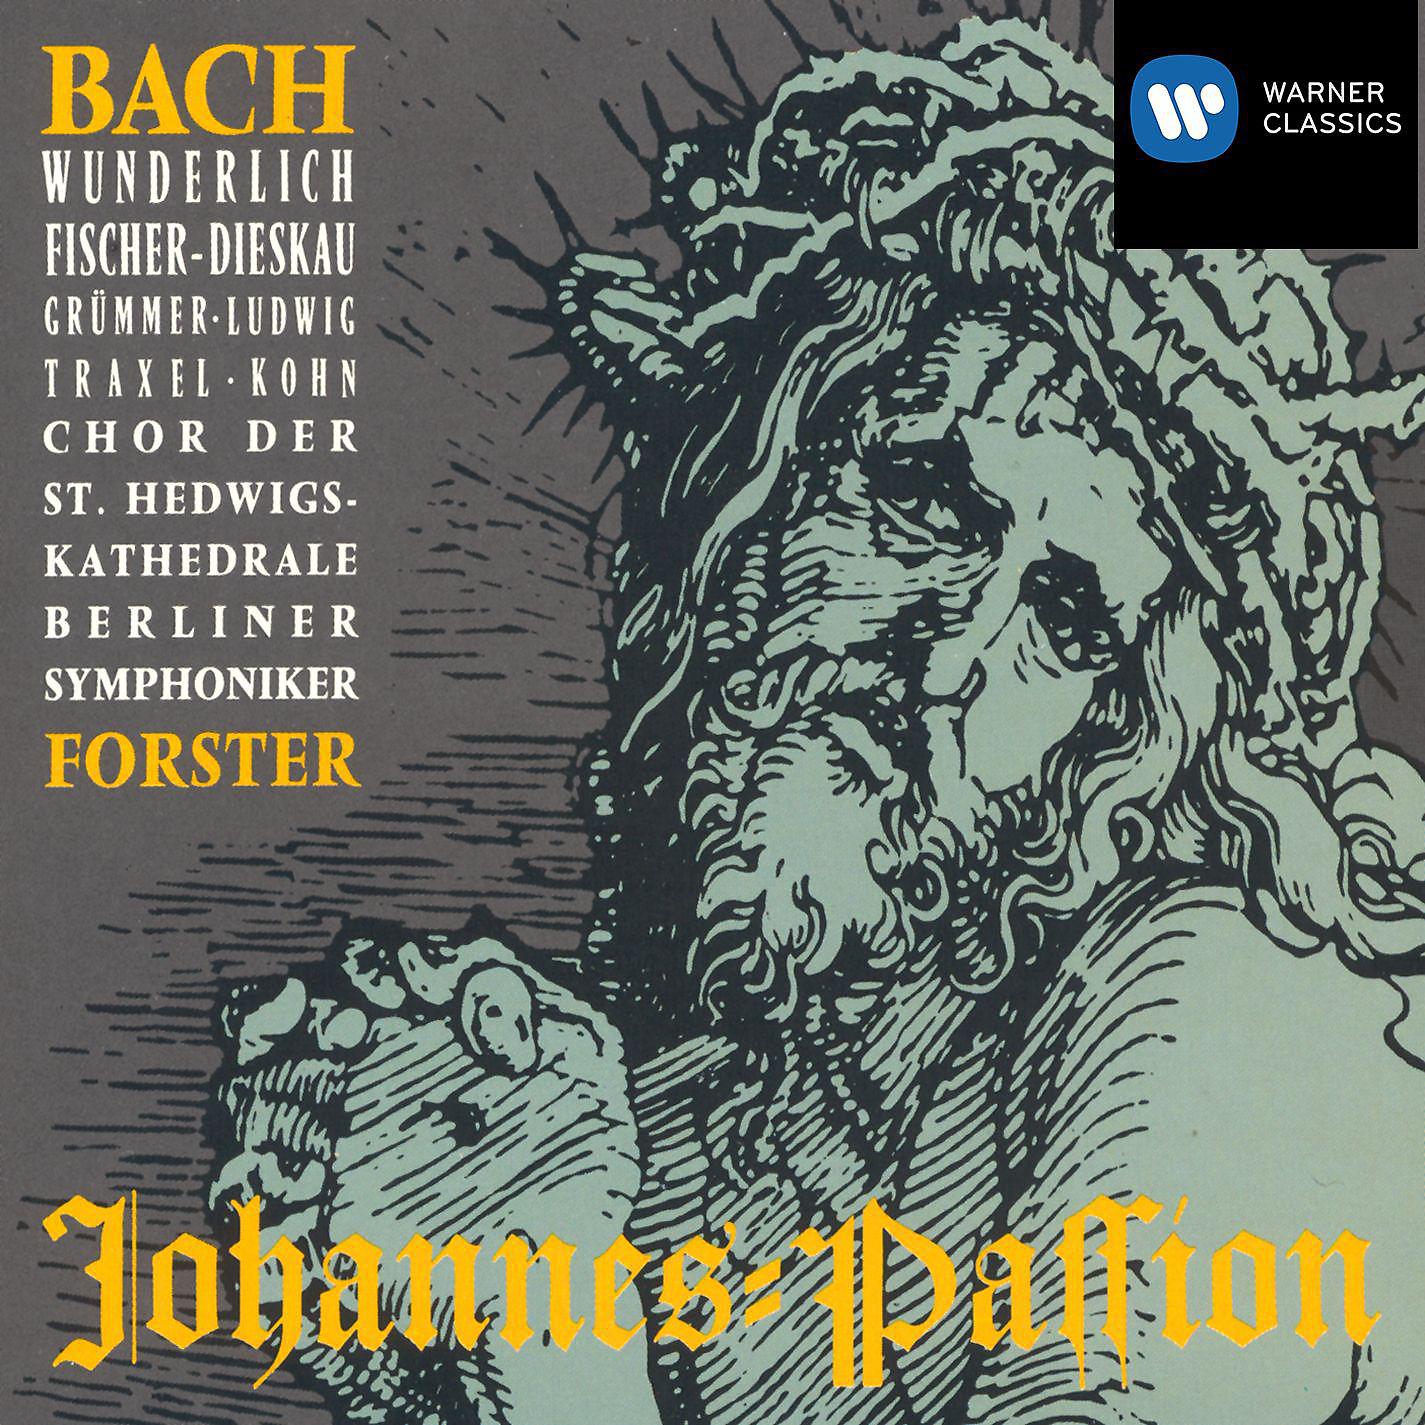 Постер альбома Bach: Johannes-Passion, BWV 245